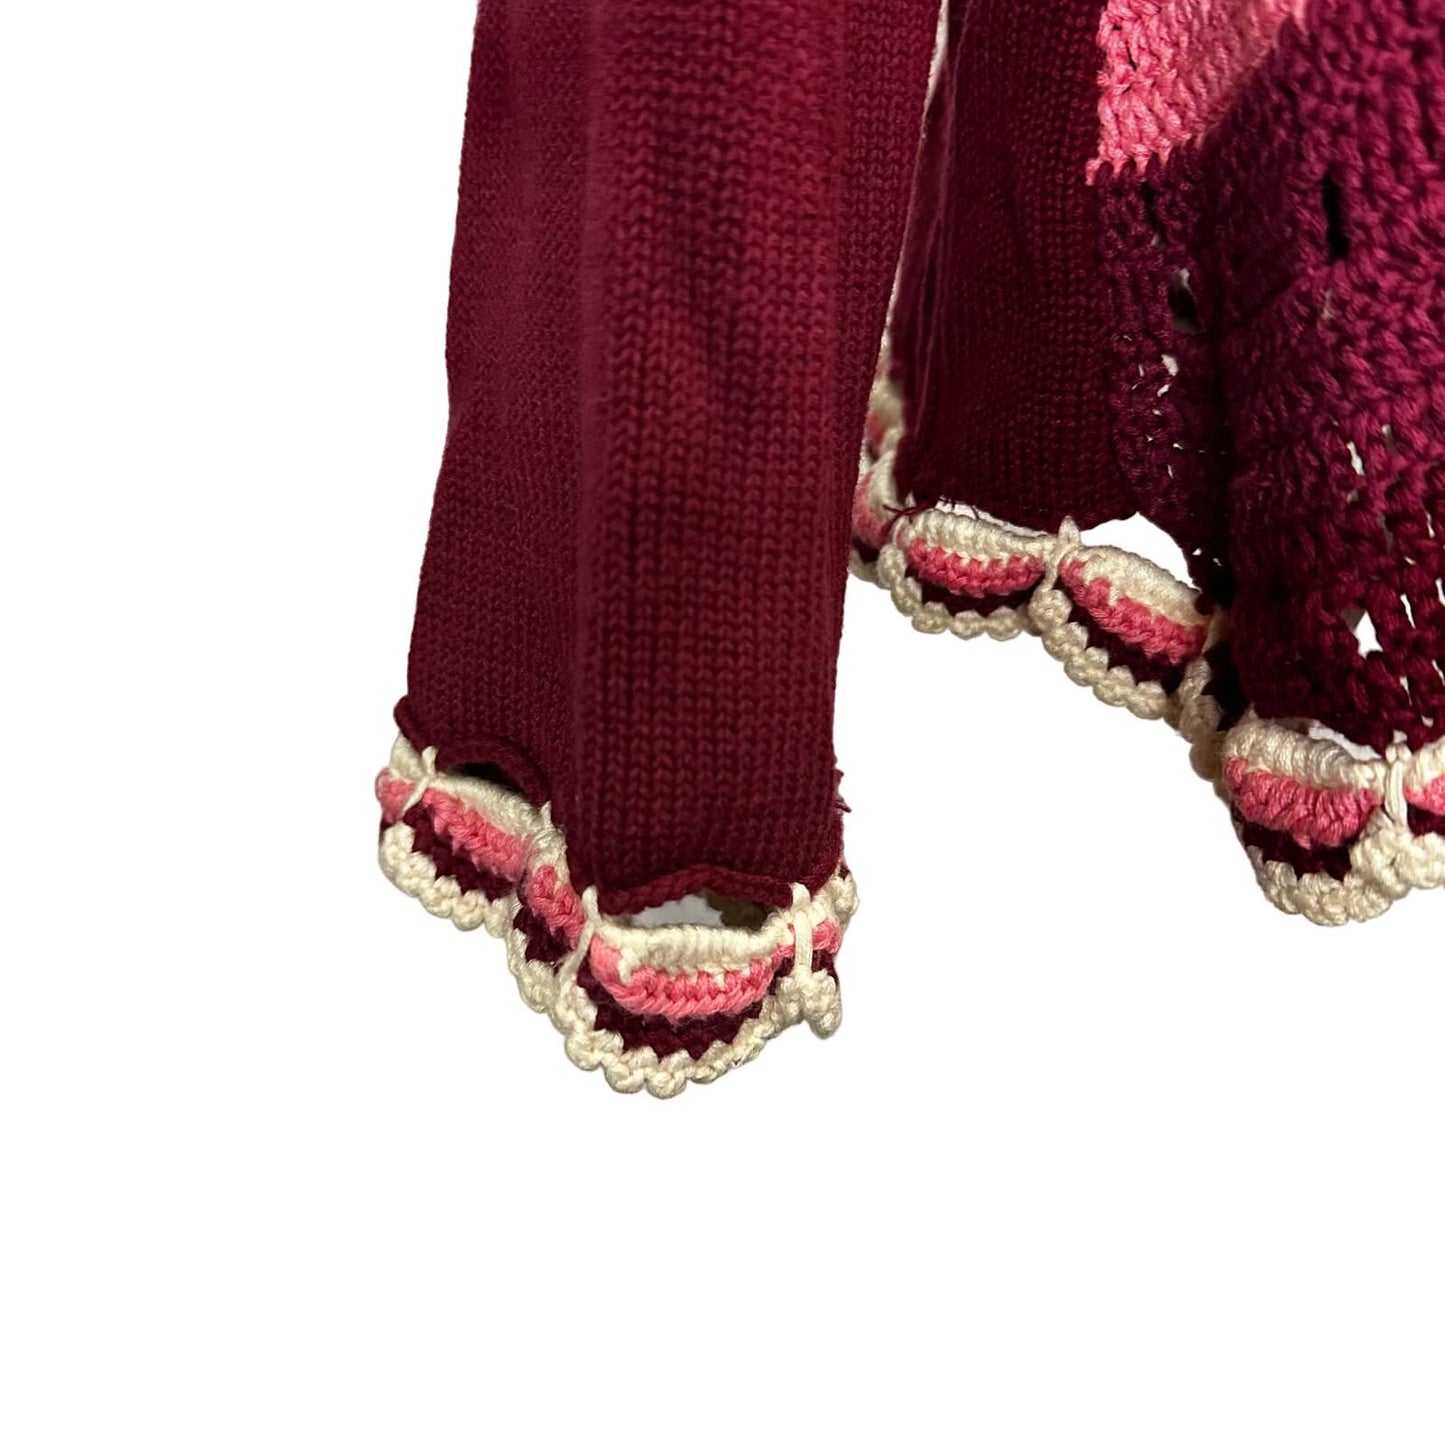 Storybook Knits Crochet Cozy Burgundy, Pink and Cream Cardigan Sz L